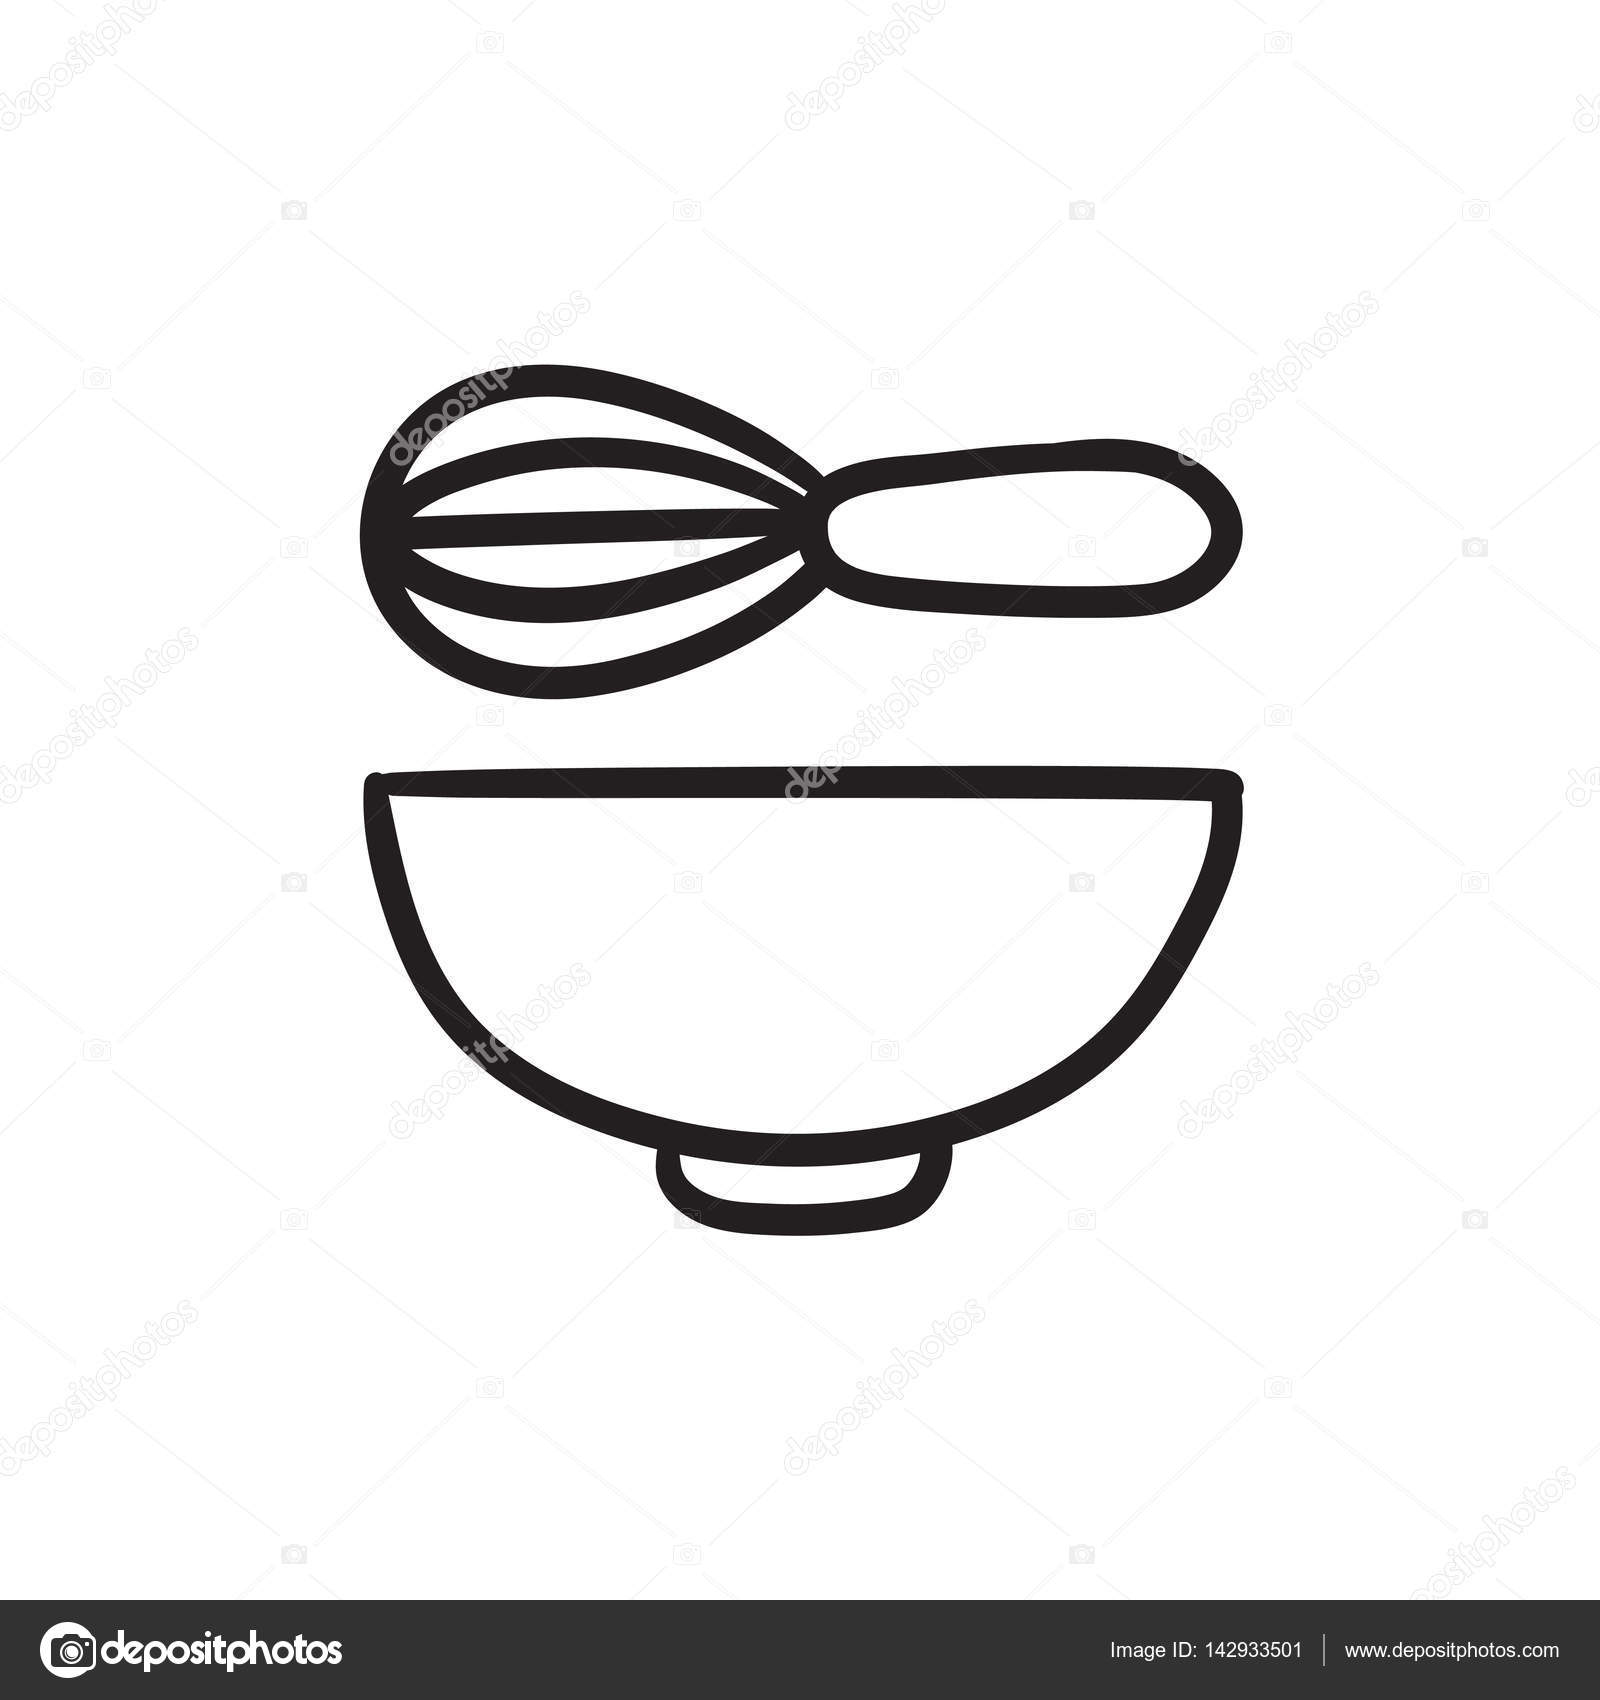 https://st3.depositphotos.com/1001599/14293/v/1600/depositphotos_142933501-stock-illustration-whisk-and-bowl-sketch-icon.jpg